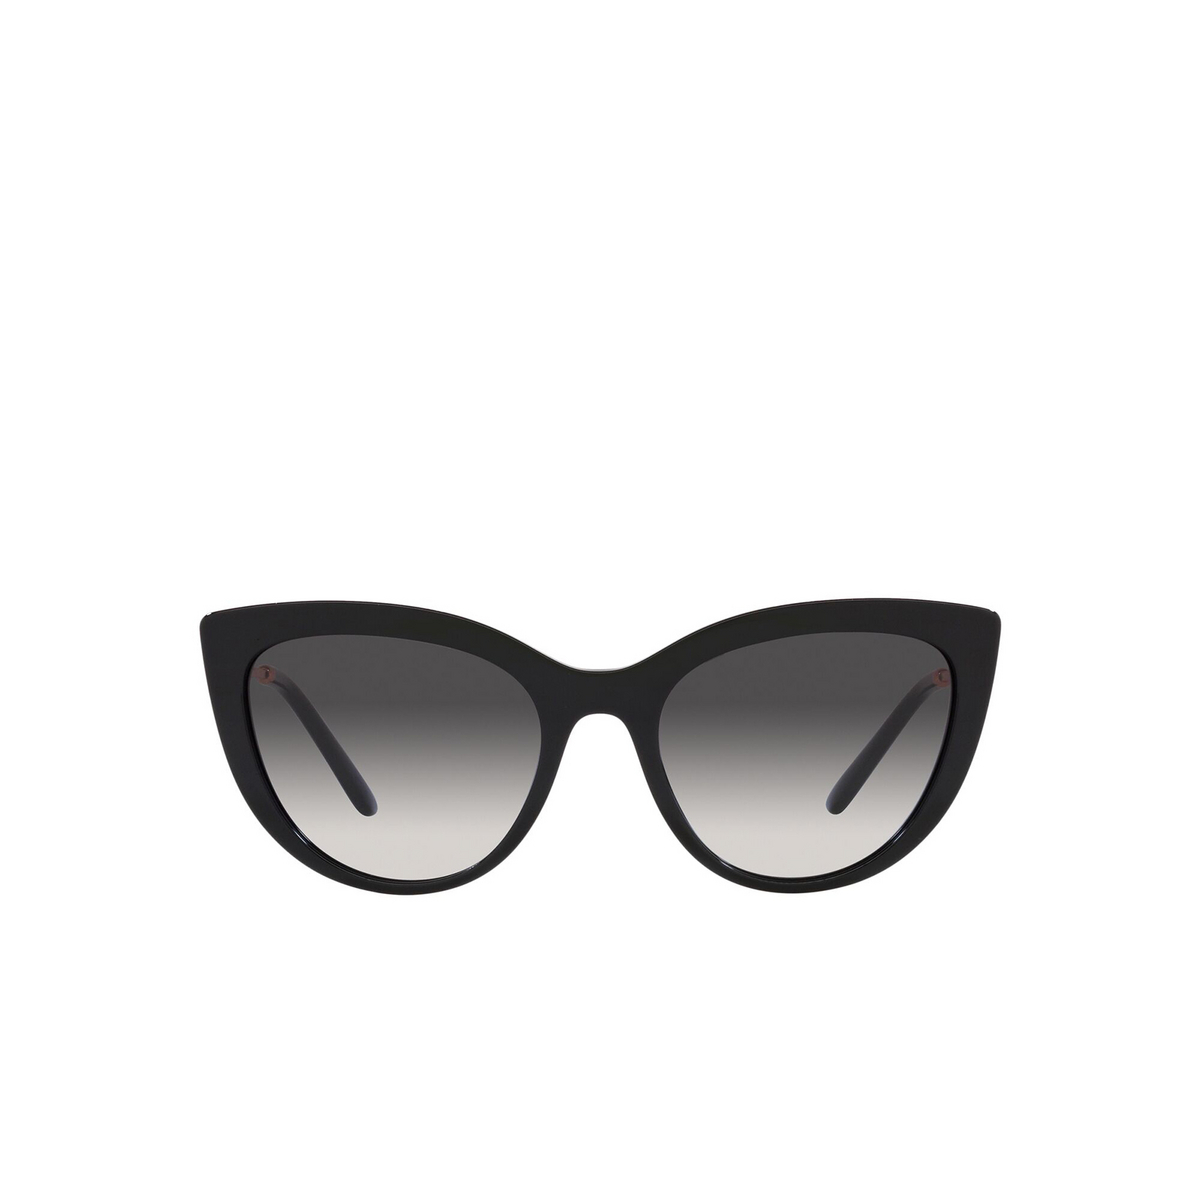 Dolce & Gabbana DG4408 Sunglasses 501/8G Black - front view